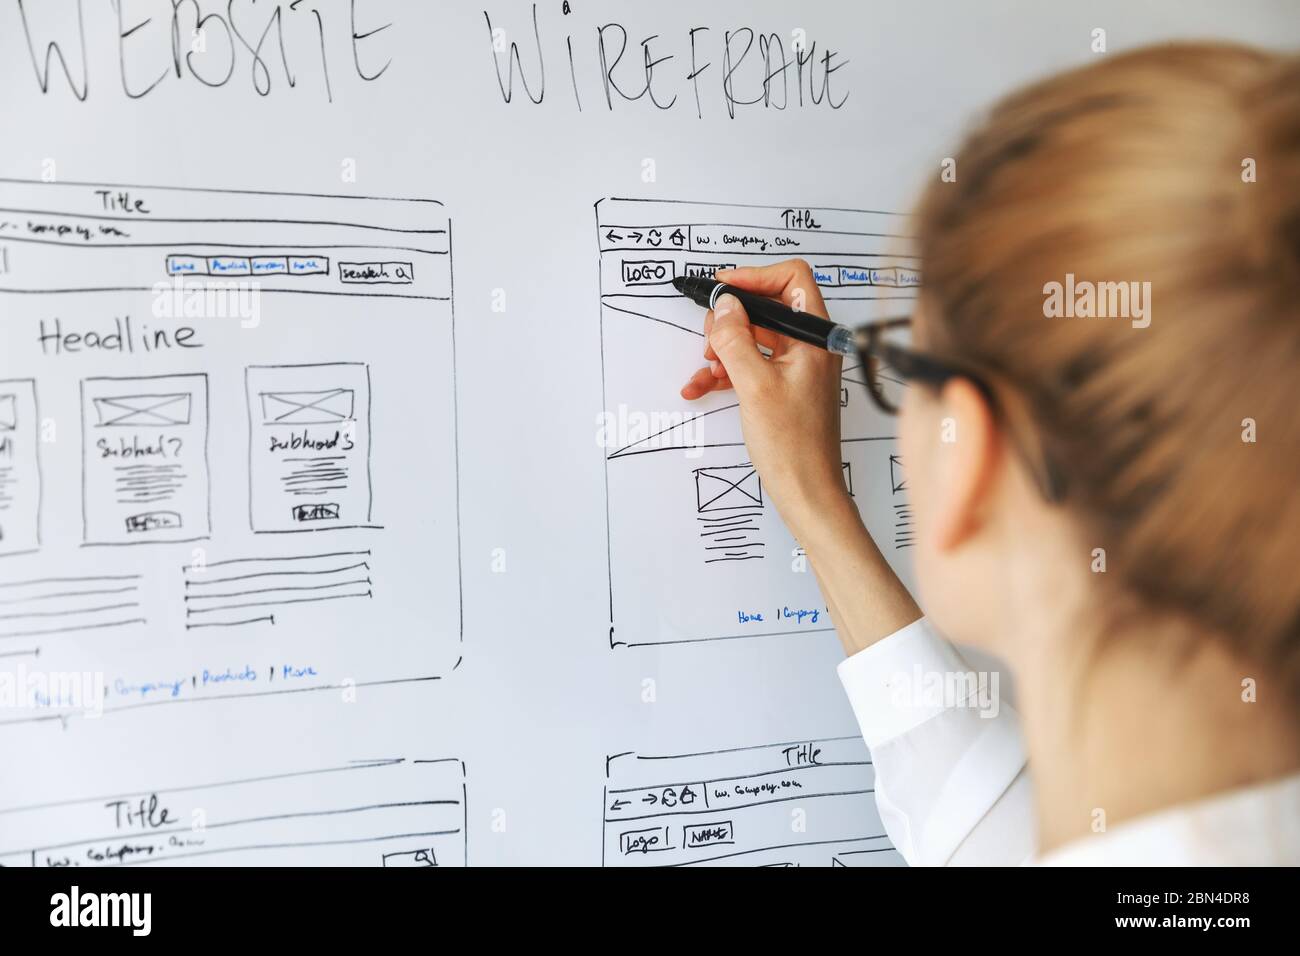 UI UX designer drawing new website wireframe Stock Photo